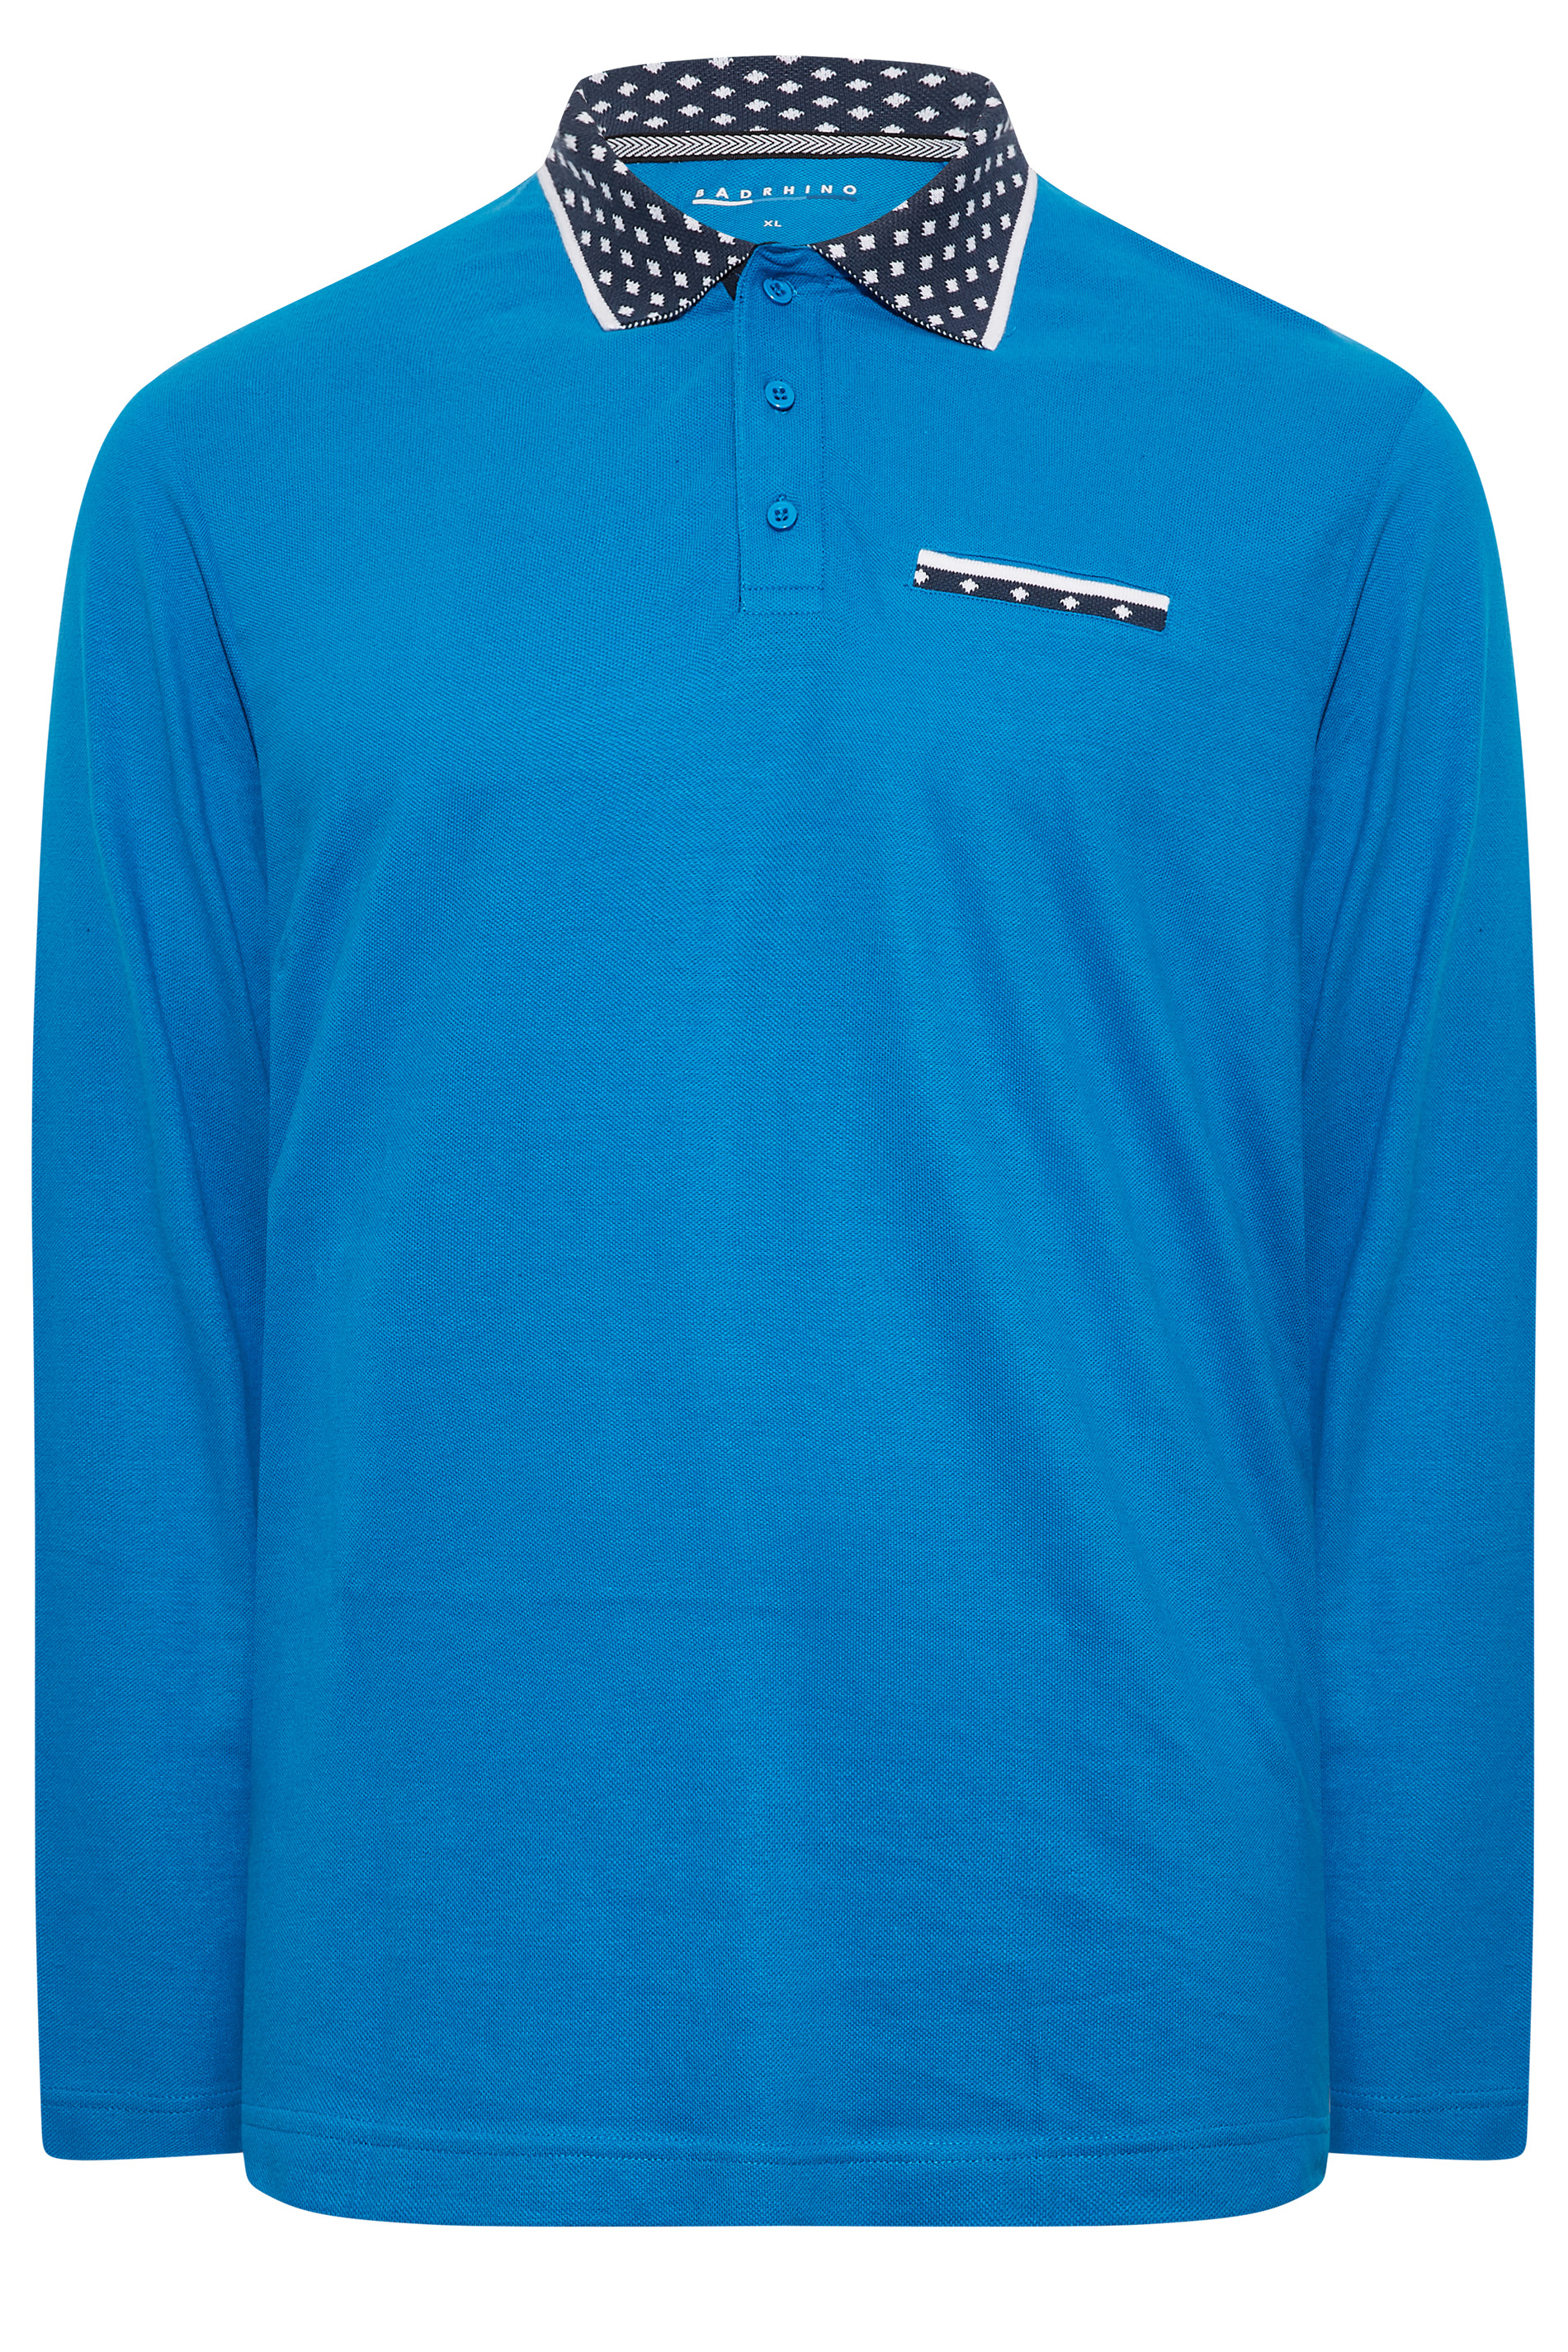 BadRhino Big & Tall Blue Dobby Collar Polo Shirt | BadRhino 3